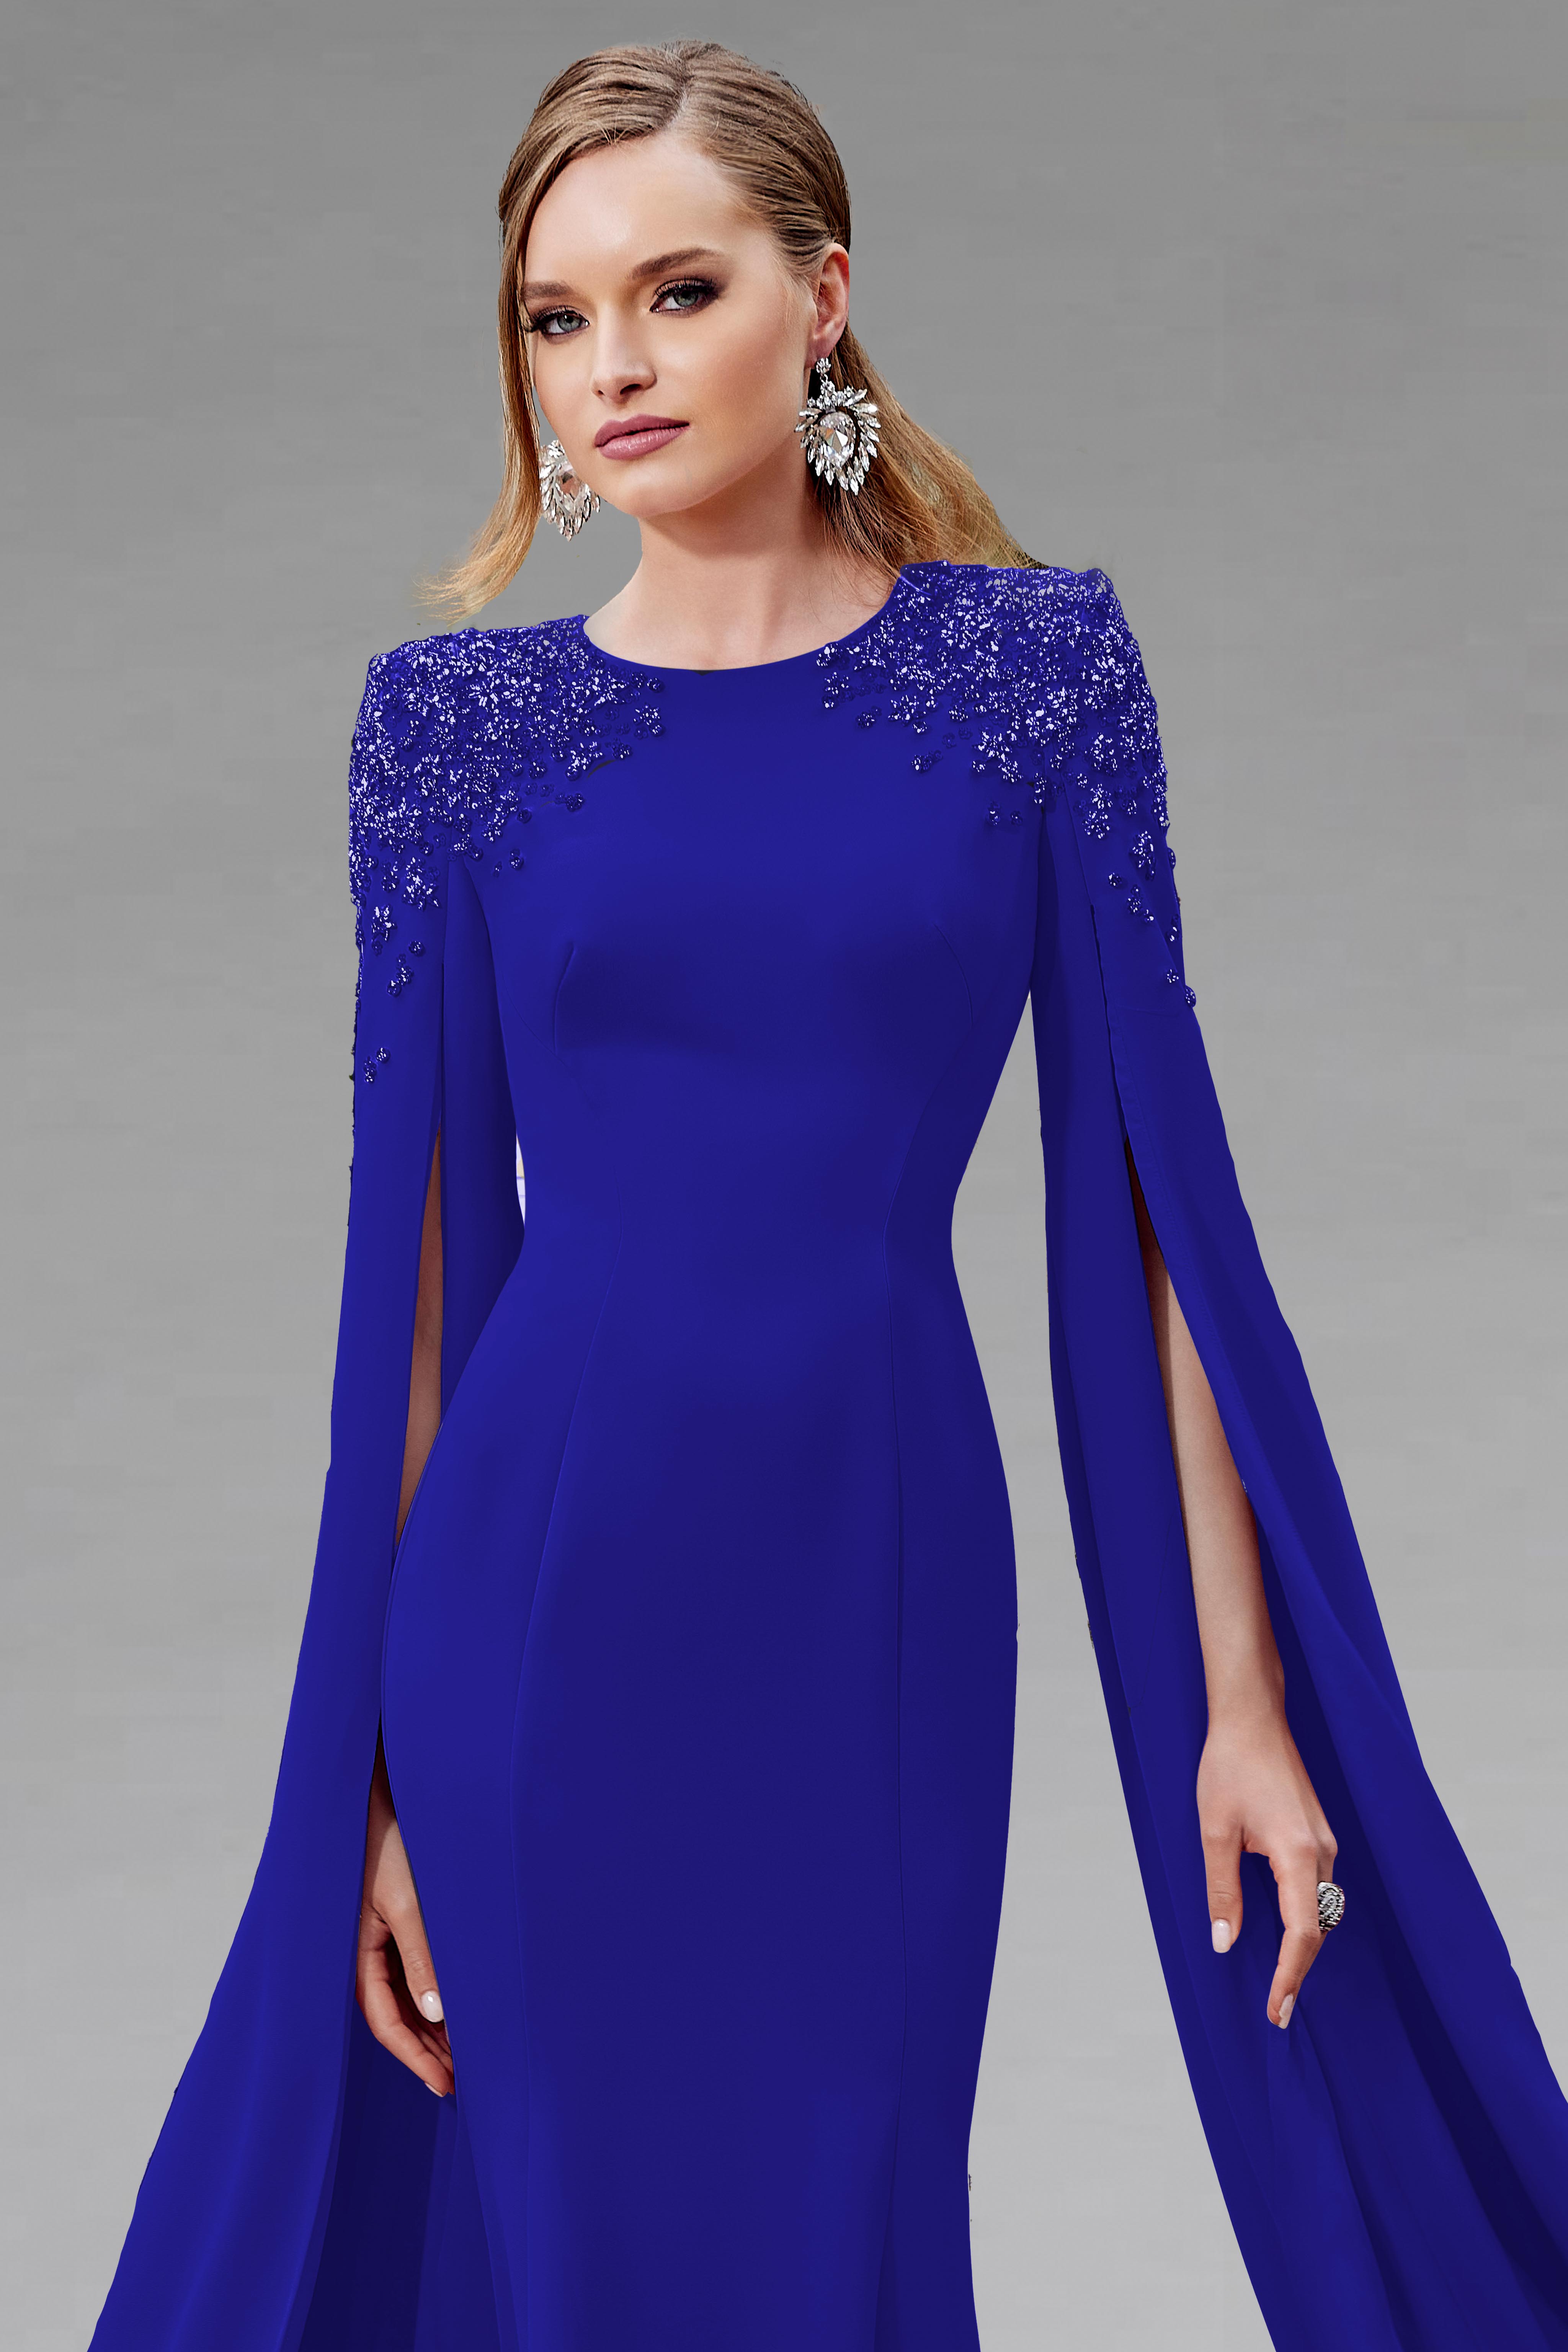 Custom Modest Burgundy Long Sleeve Prom Dress, Pretty Party Dress,GDC1230